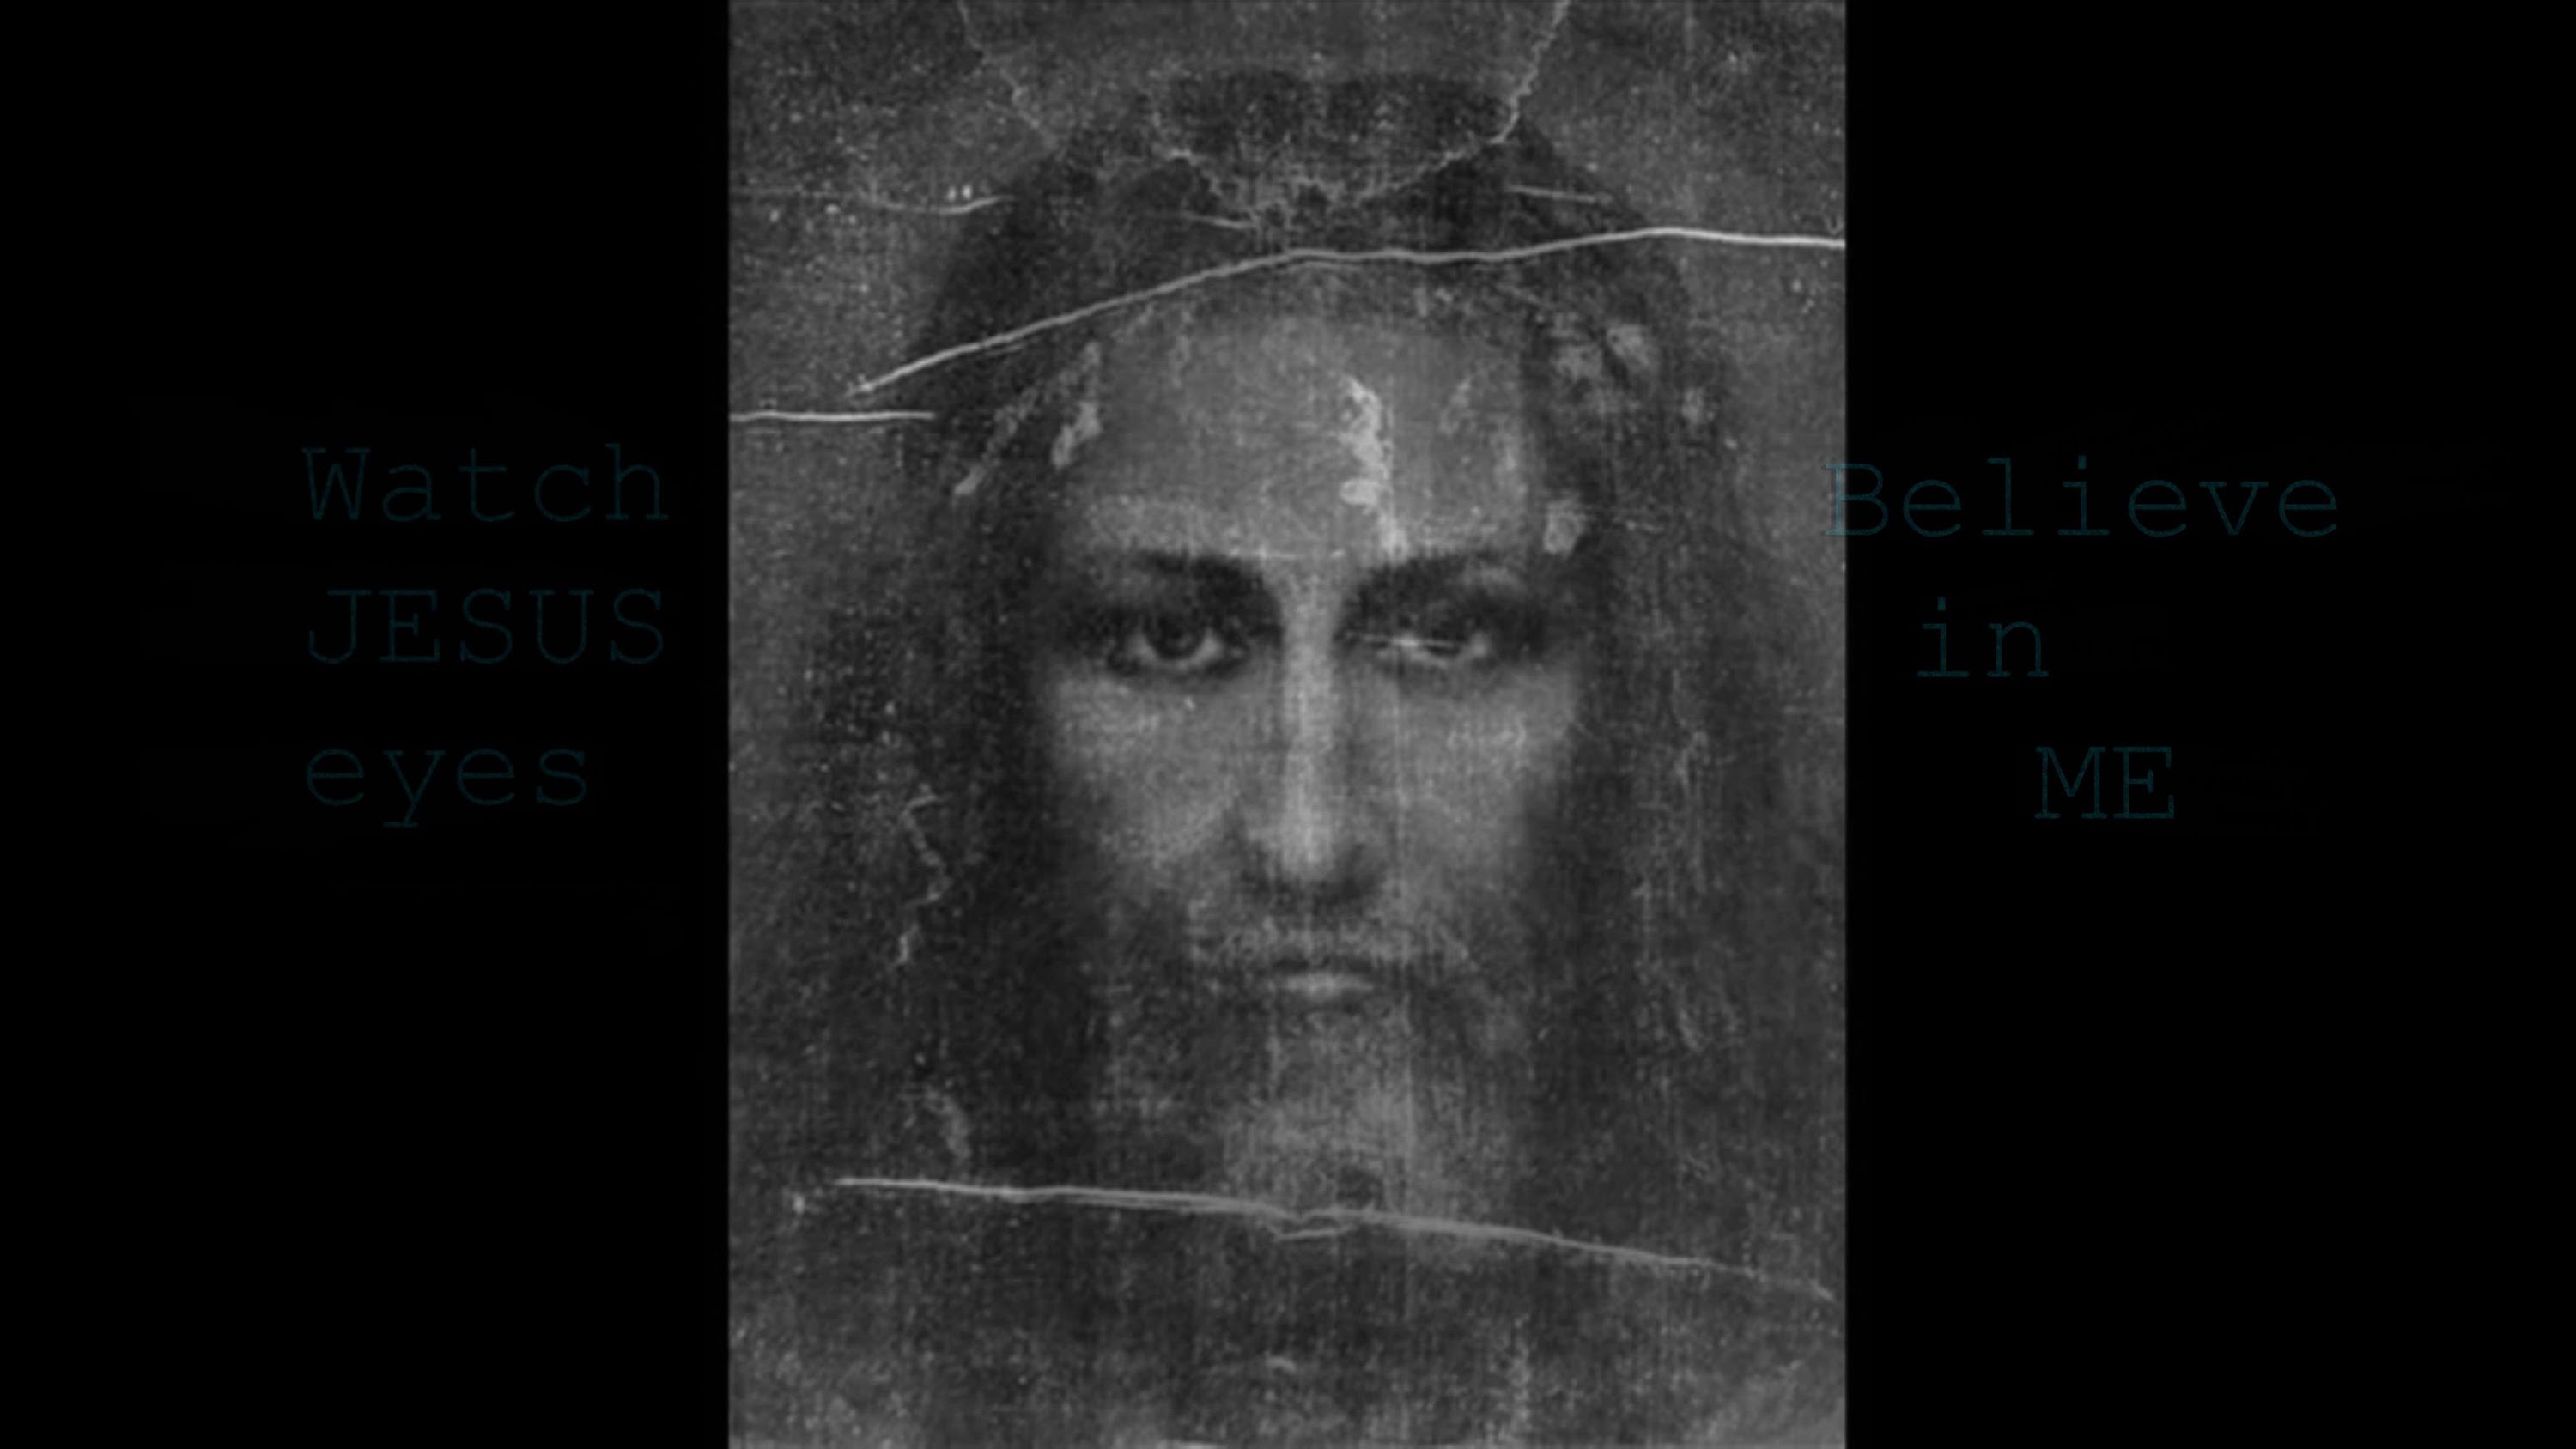 Jesus’ image on the Shroud of Turin